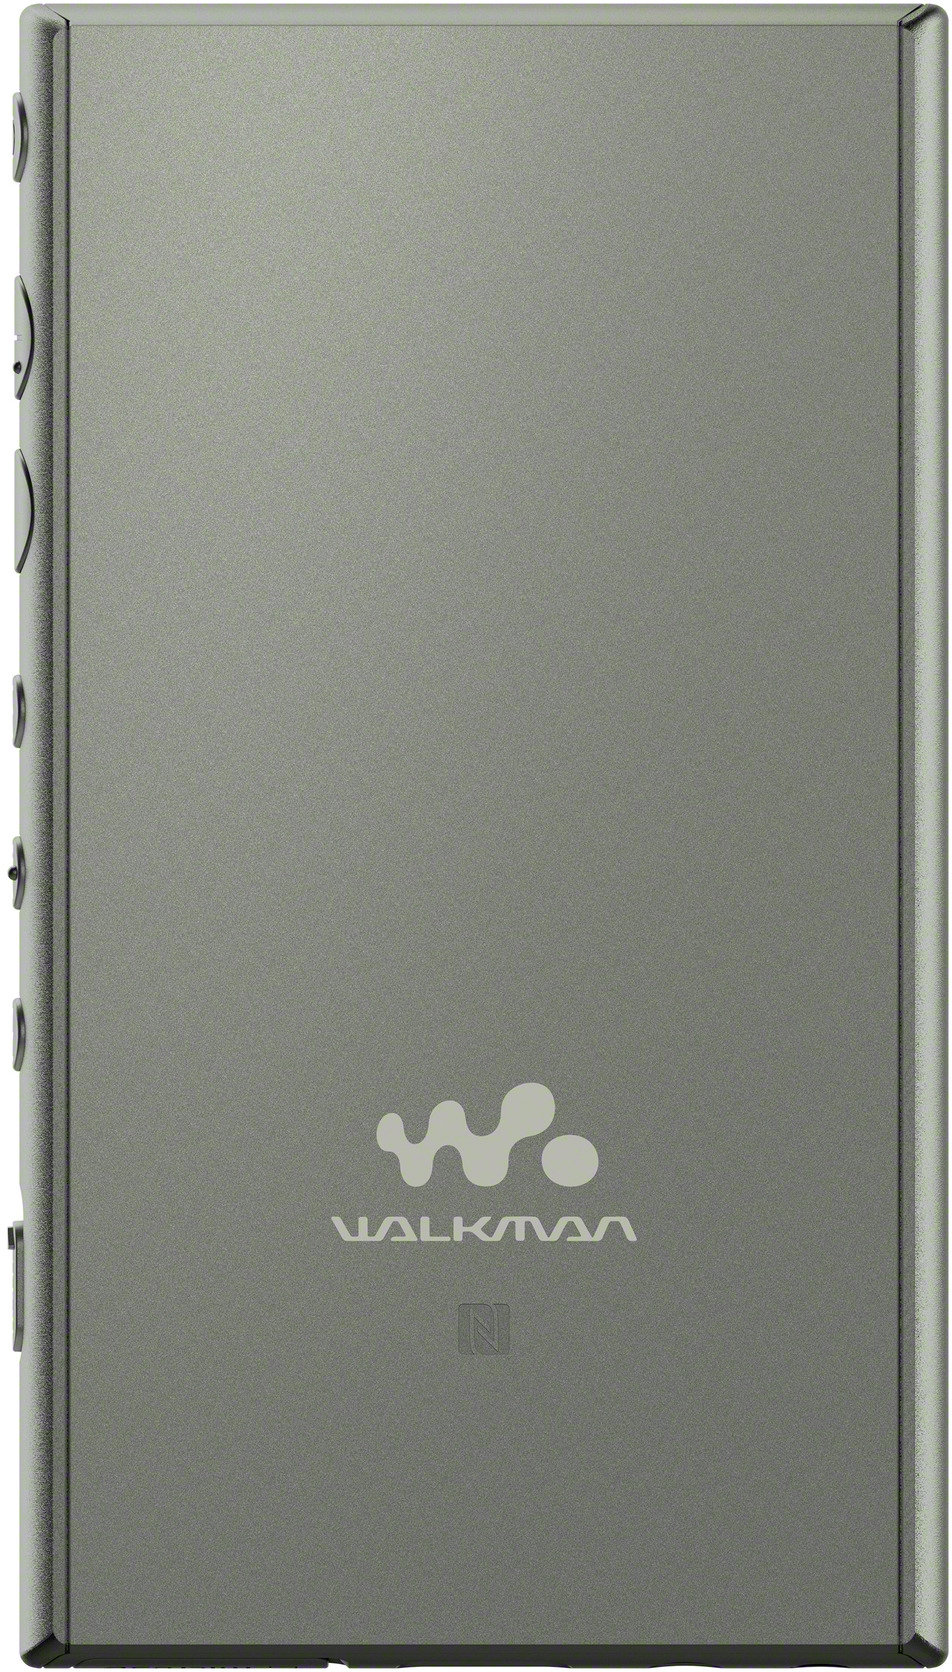 GB, 16 Walkman 9.0 Grün Android Mp3-Player SONY NW-A105